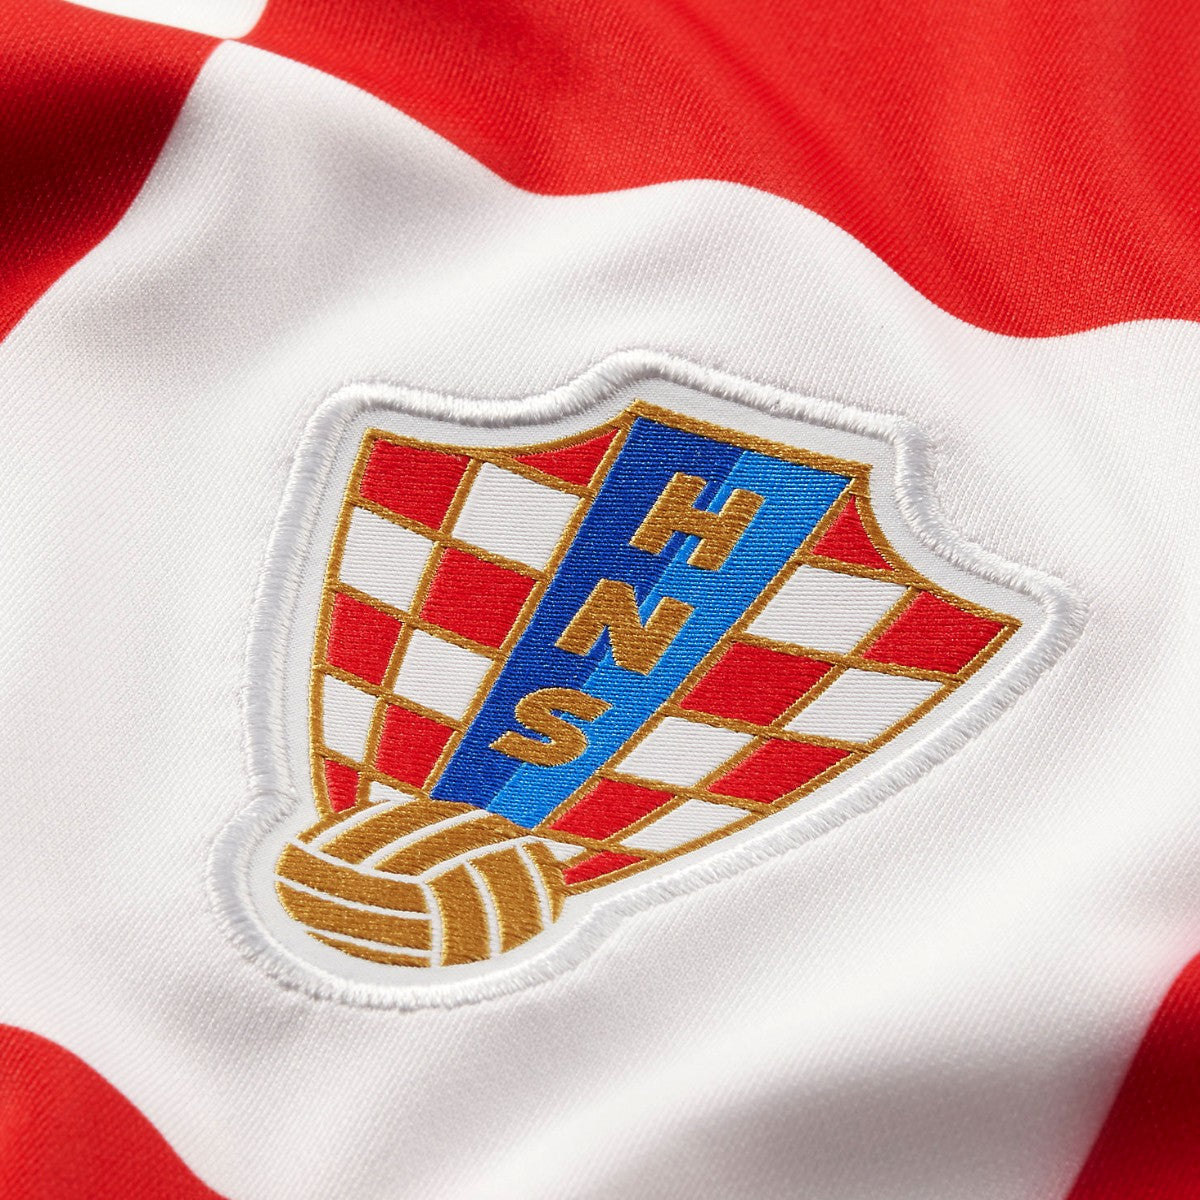 Croatia national team Home soccer jersey 2020/21 - Nike ...